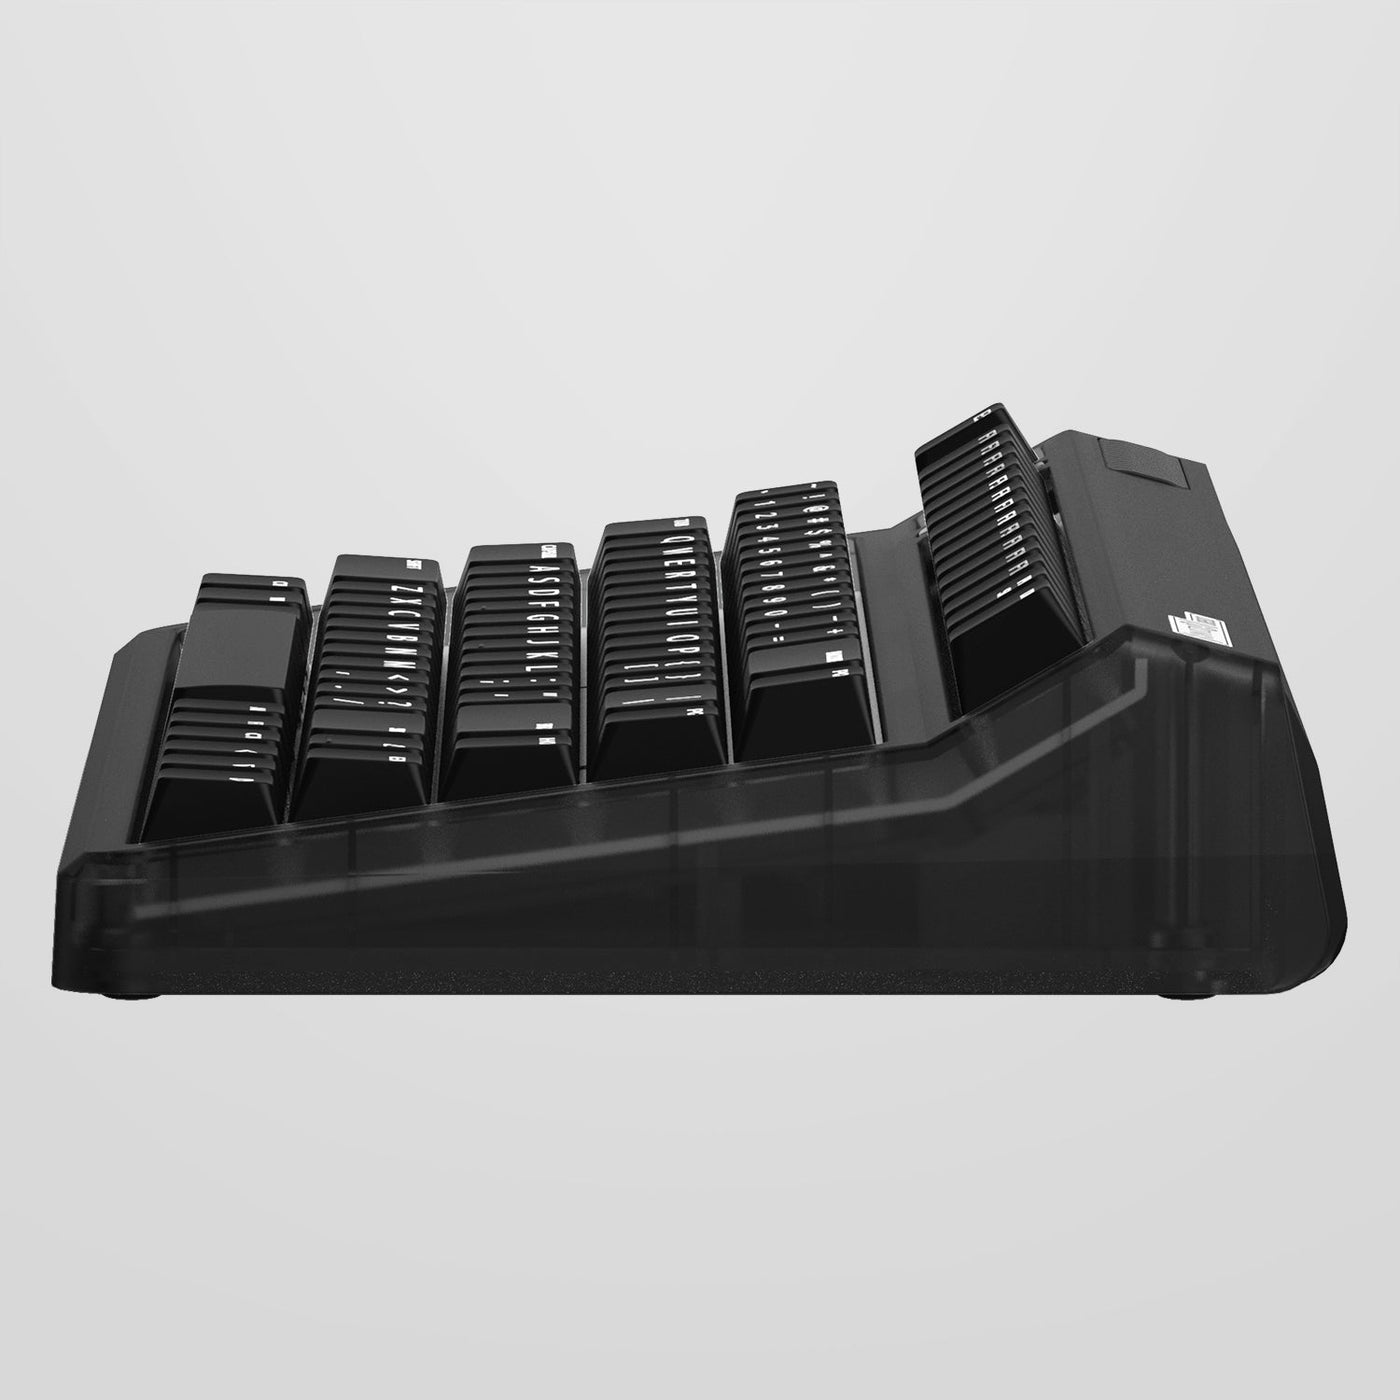 IQUNIX OG80  Dark Side Wireless Mechanical Keyboard